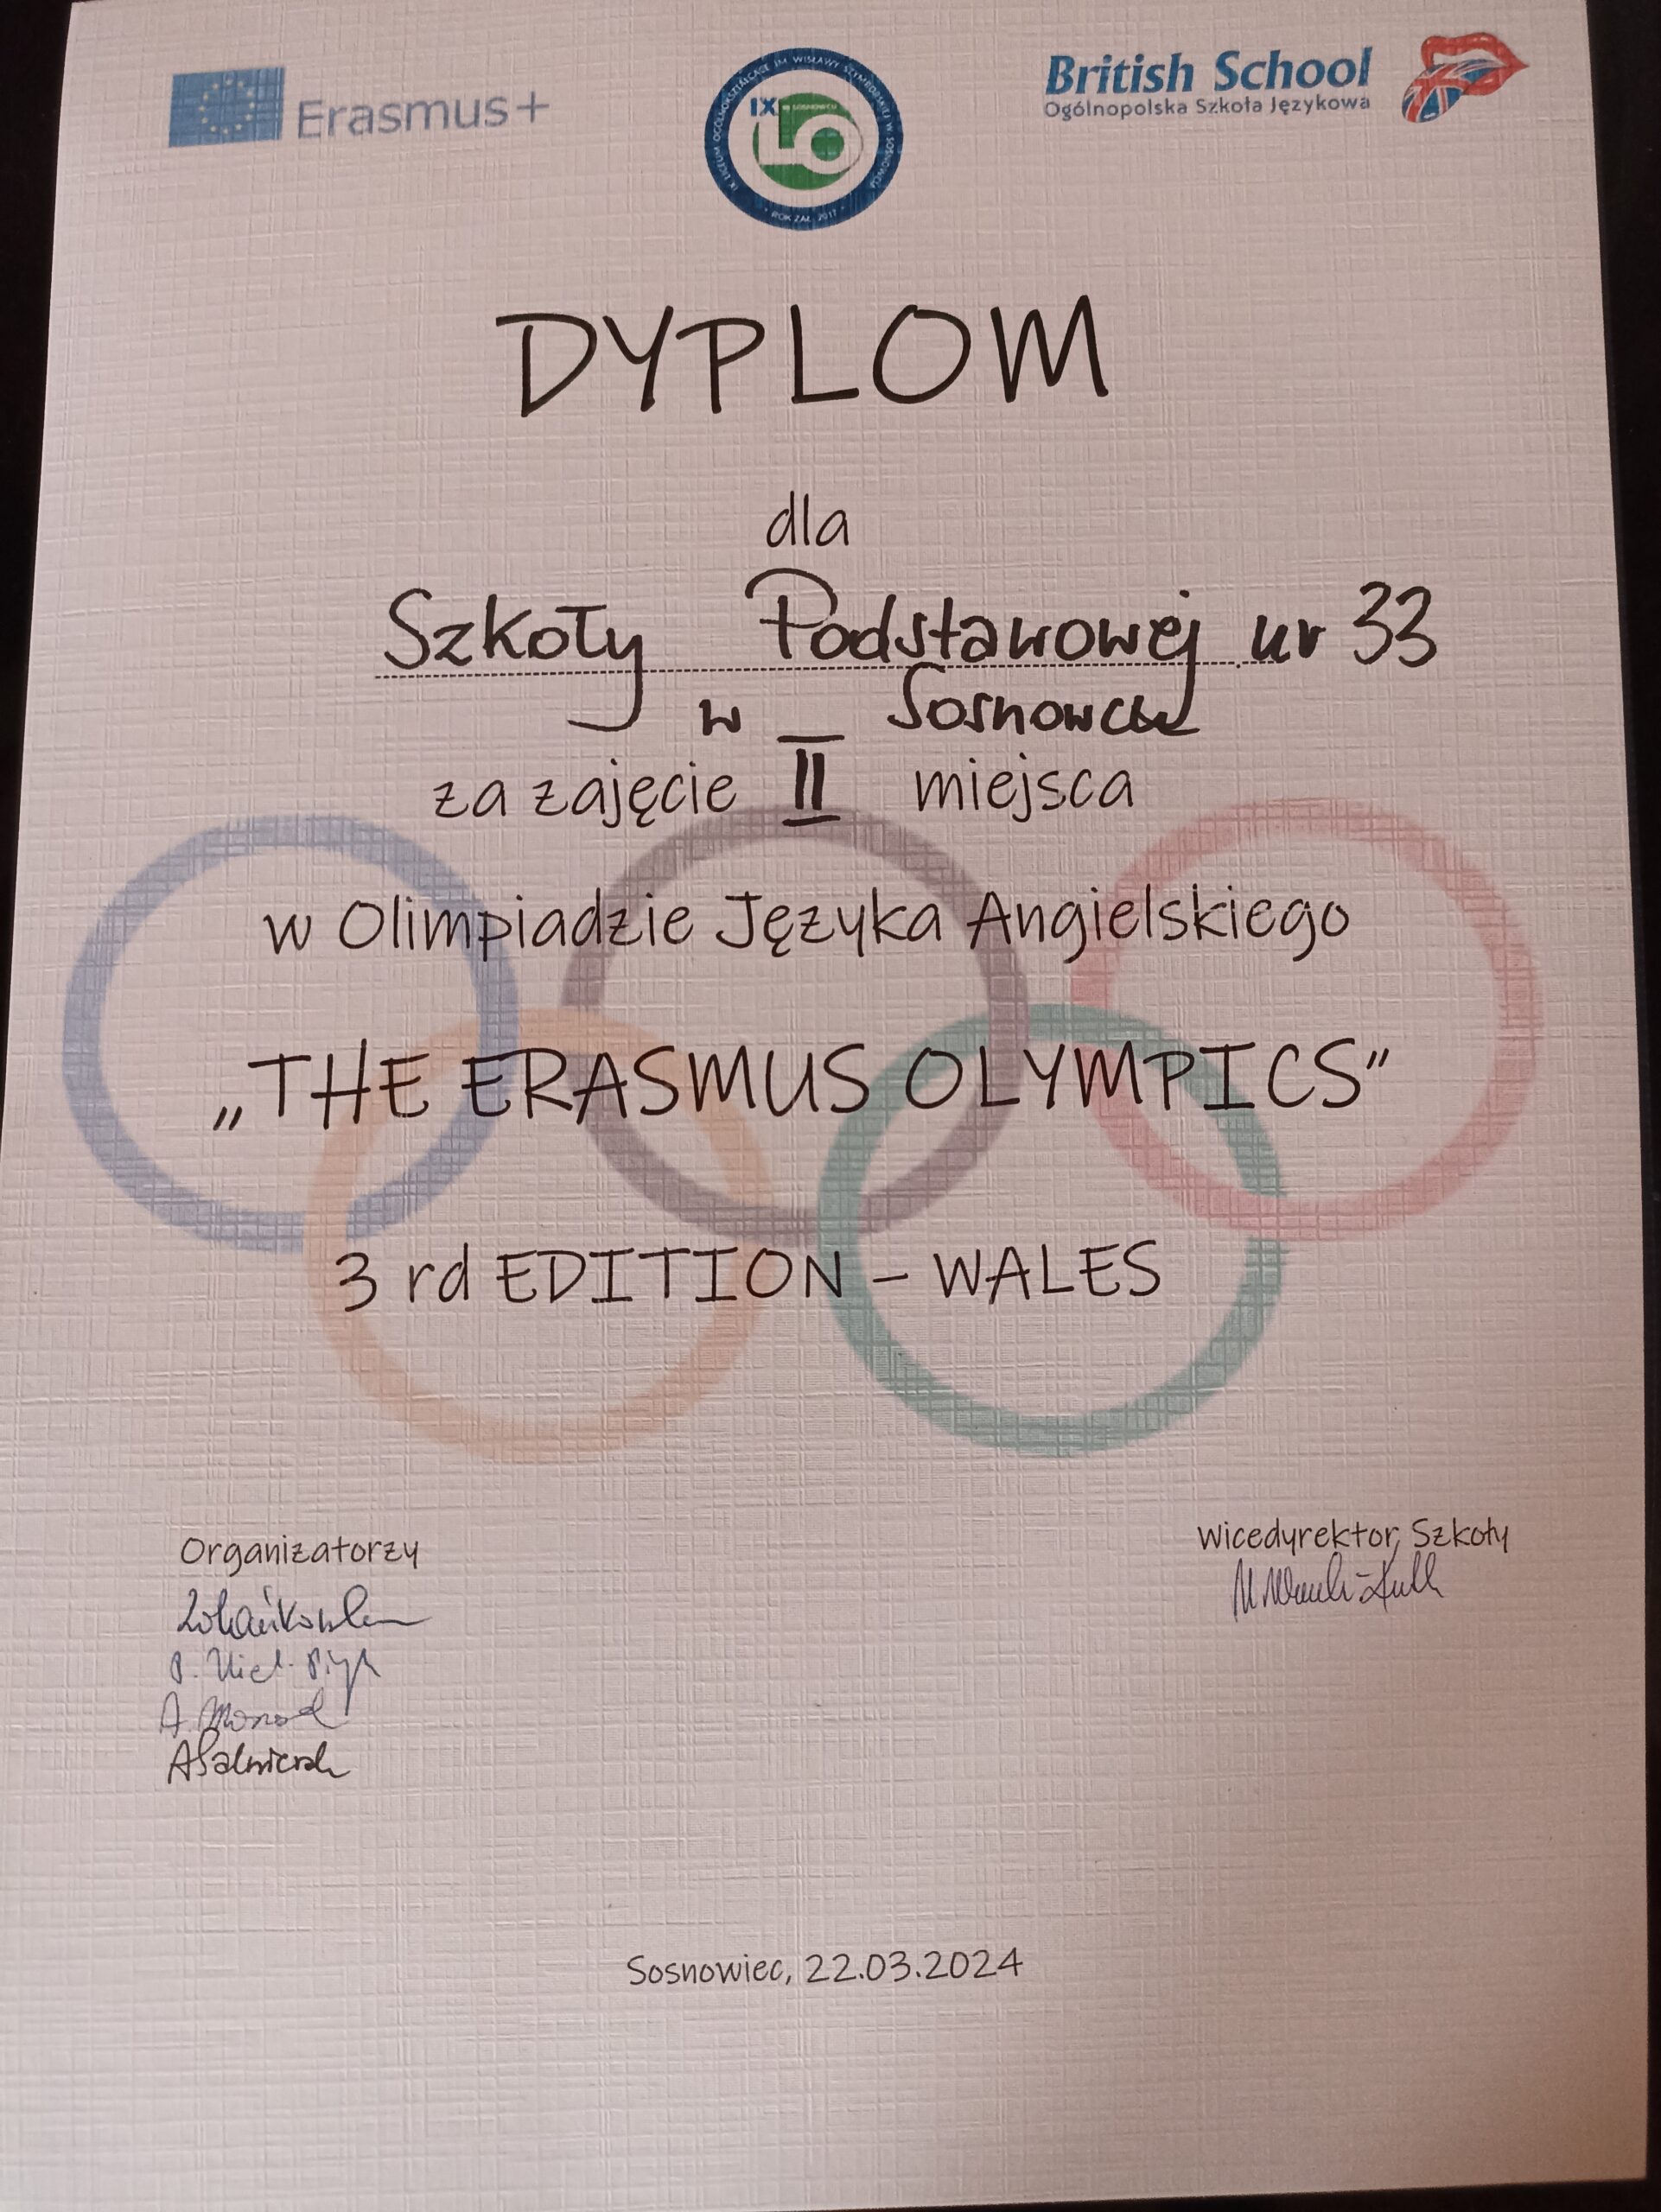 Erasmus Olympics